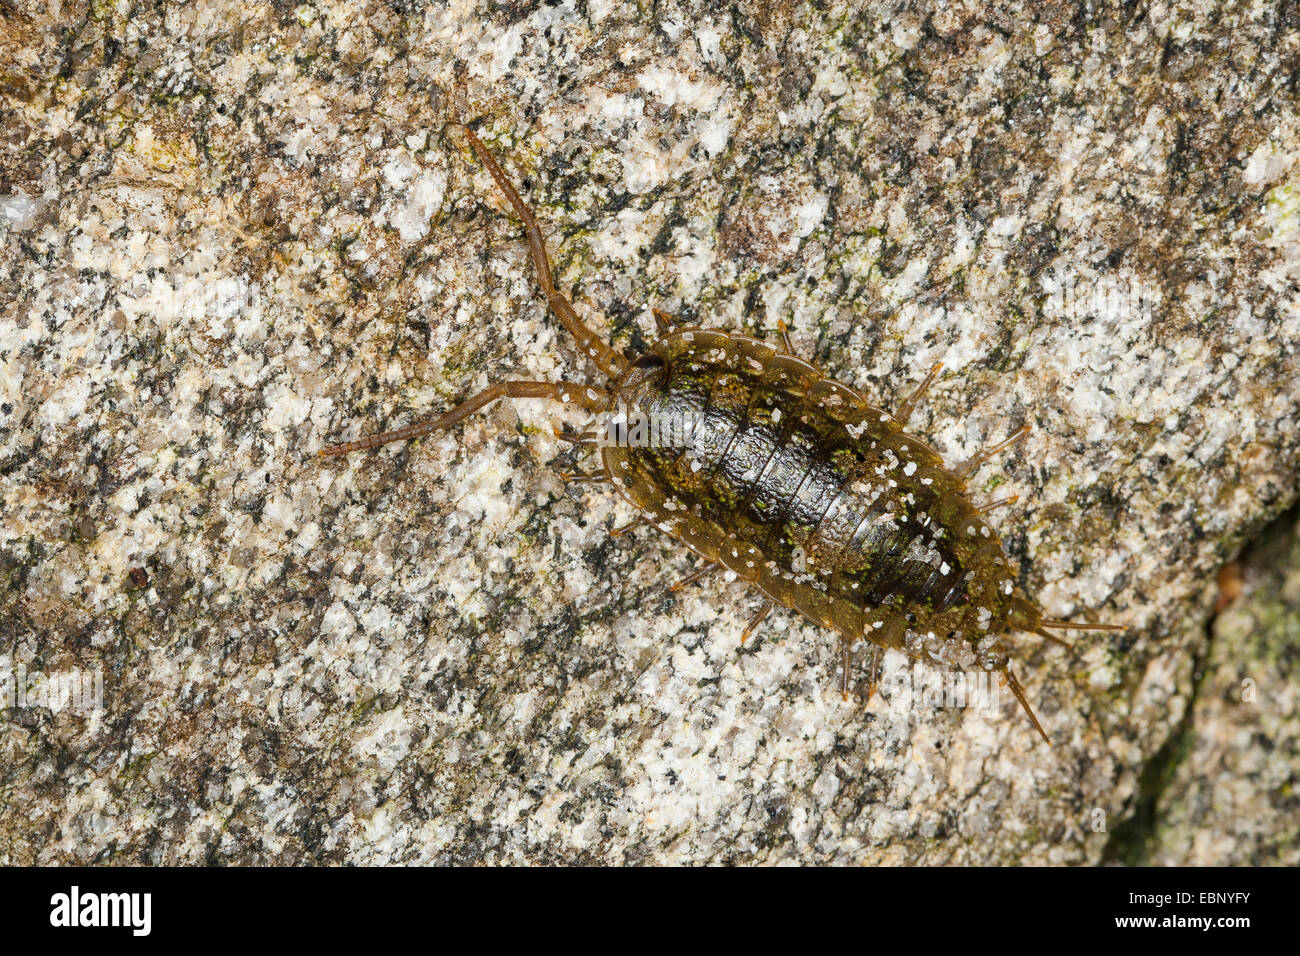 Great sea-slater, Sea slater, Quay-louse, Sea roach, Littoral woodlouse (Ligia oceanica), on a stone, Germany Stock Photo